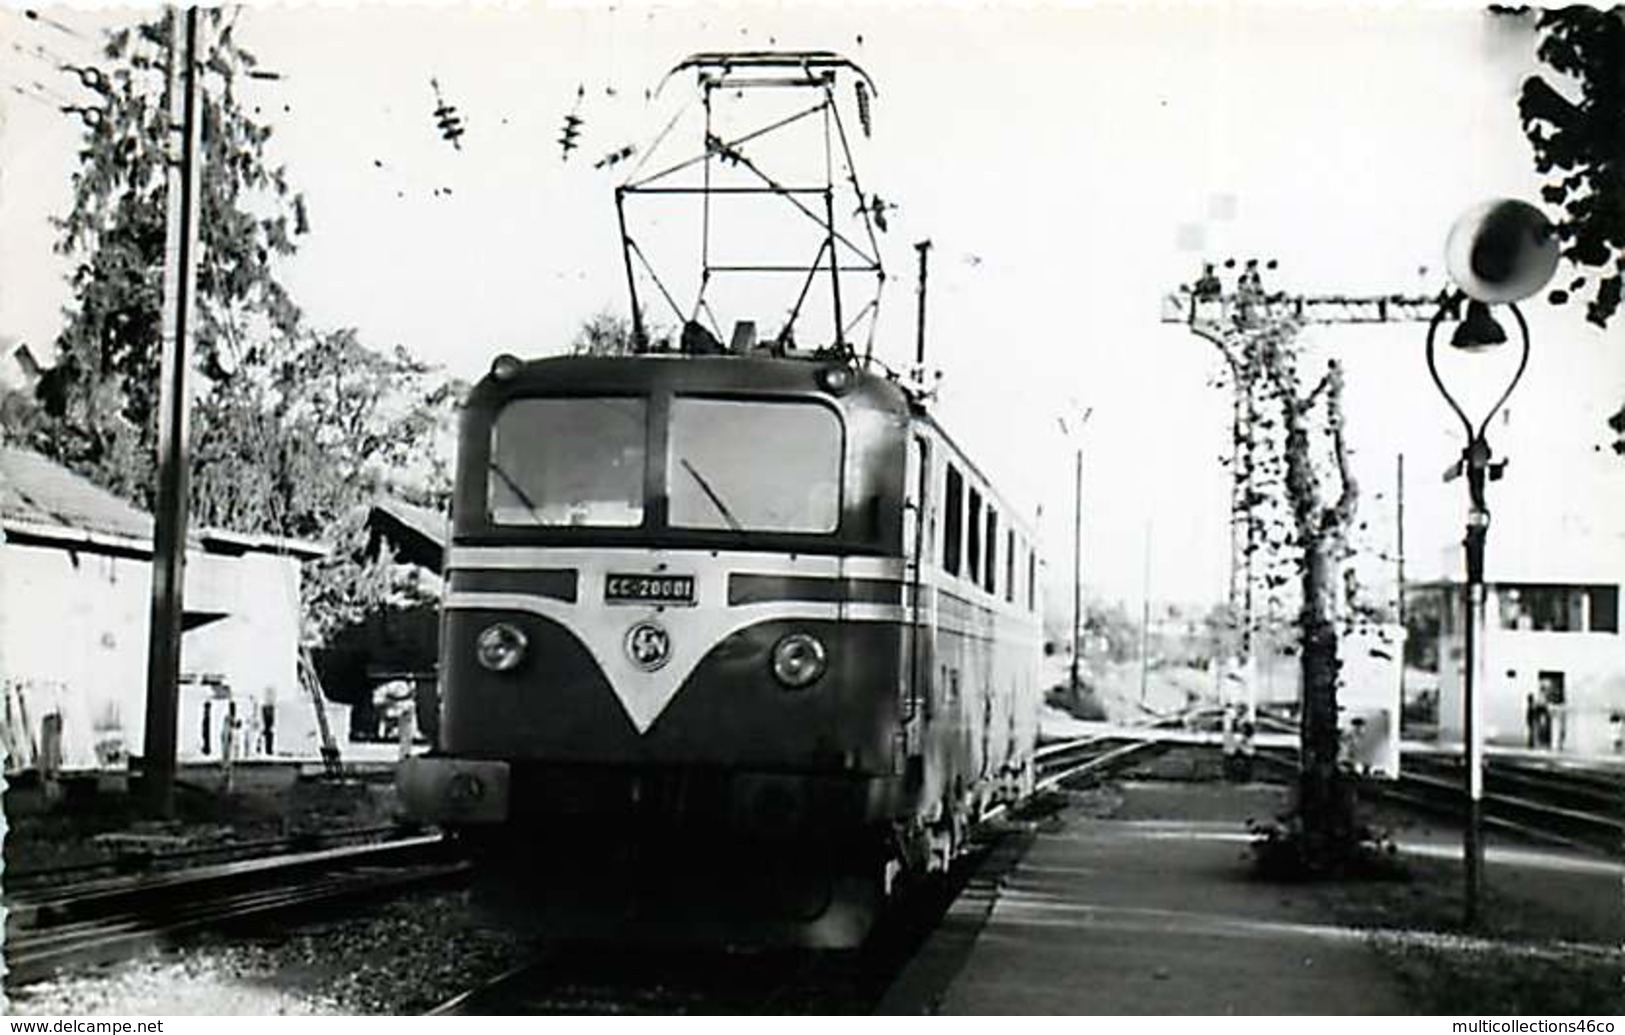 231019B - PHOTO D BREHERET Chemin De Fer Gare Train - 1954 Locomotive CC-20001 SNCF - Stations With Trains